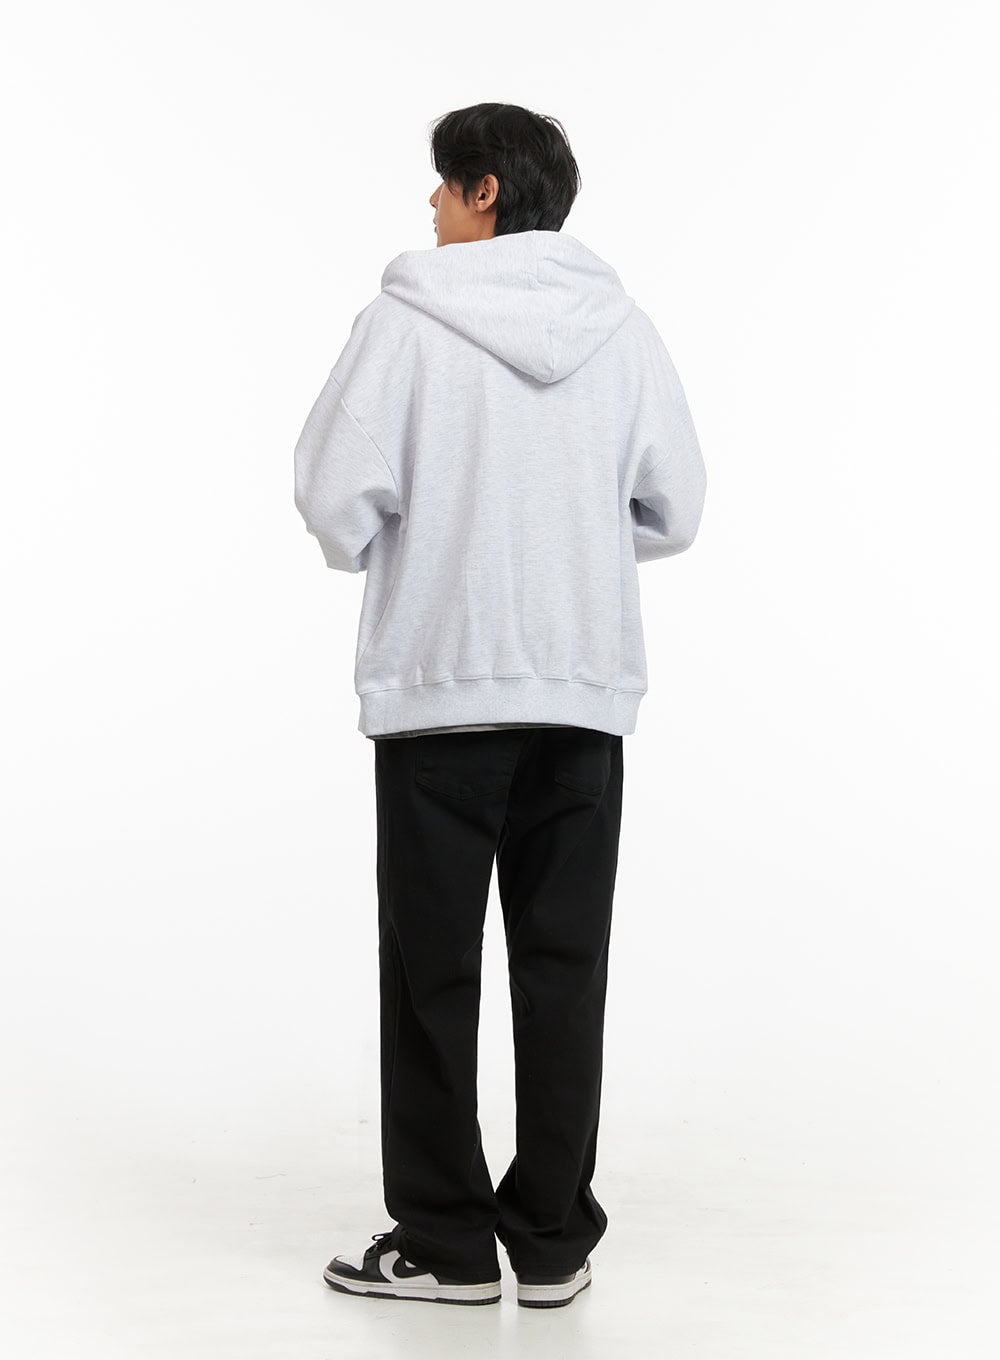 mens-basic-hoodie-jacket-white-iy416